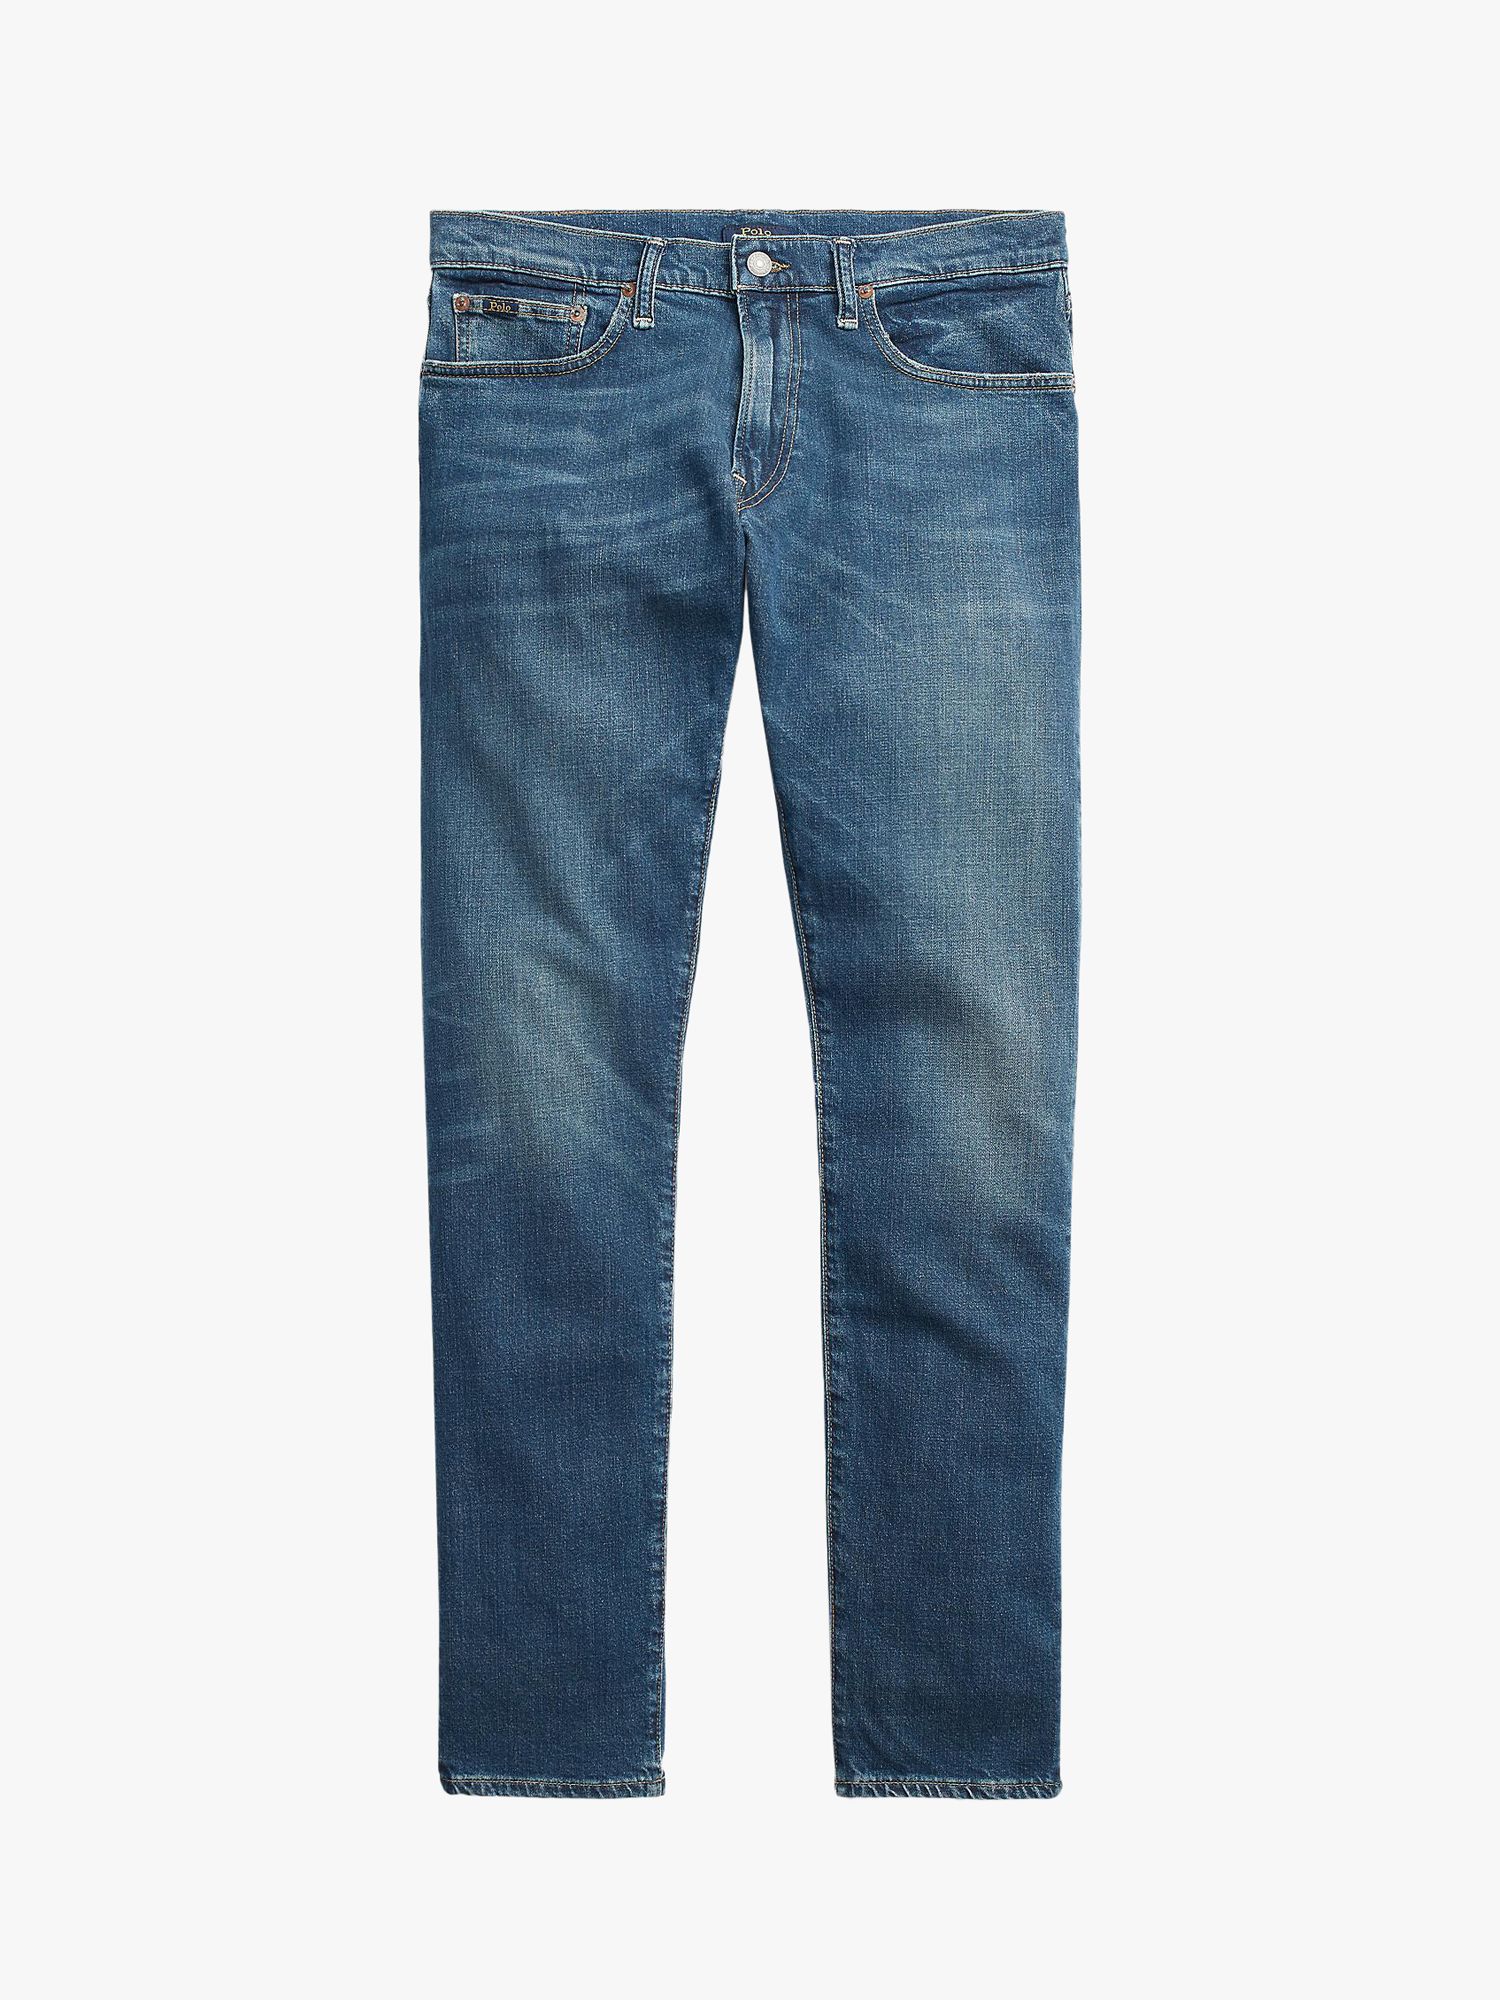 Polo Ralph Lauren Sullivan Slim Fit Five Pocket Jeans, Davies Stretch